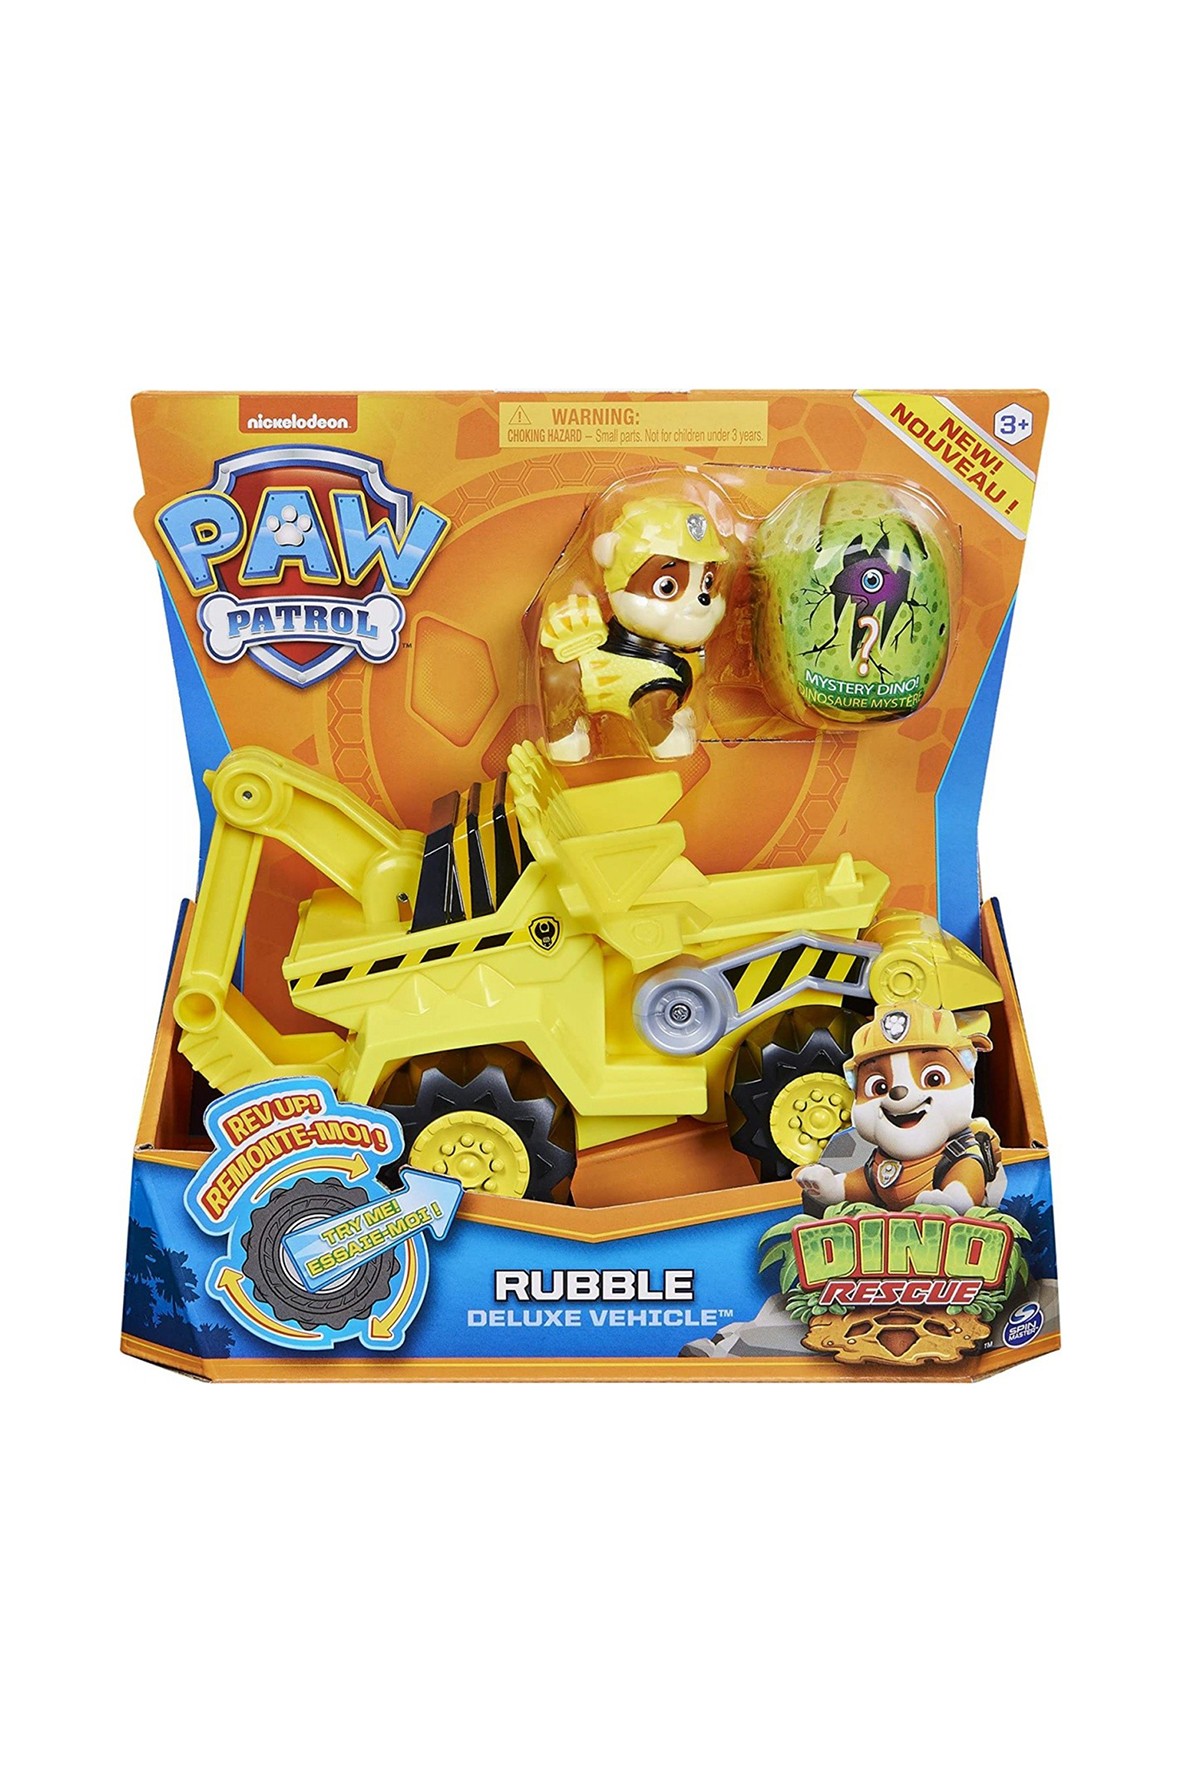 Psi Patrol Dino Rescue Rubble i Pojazd wiek 3+